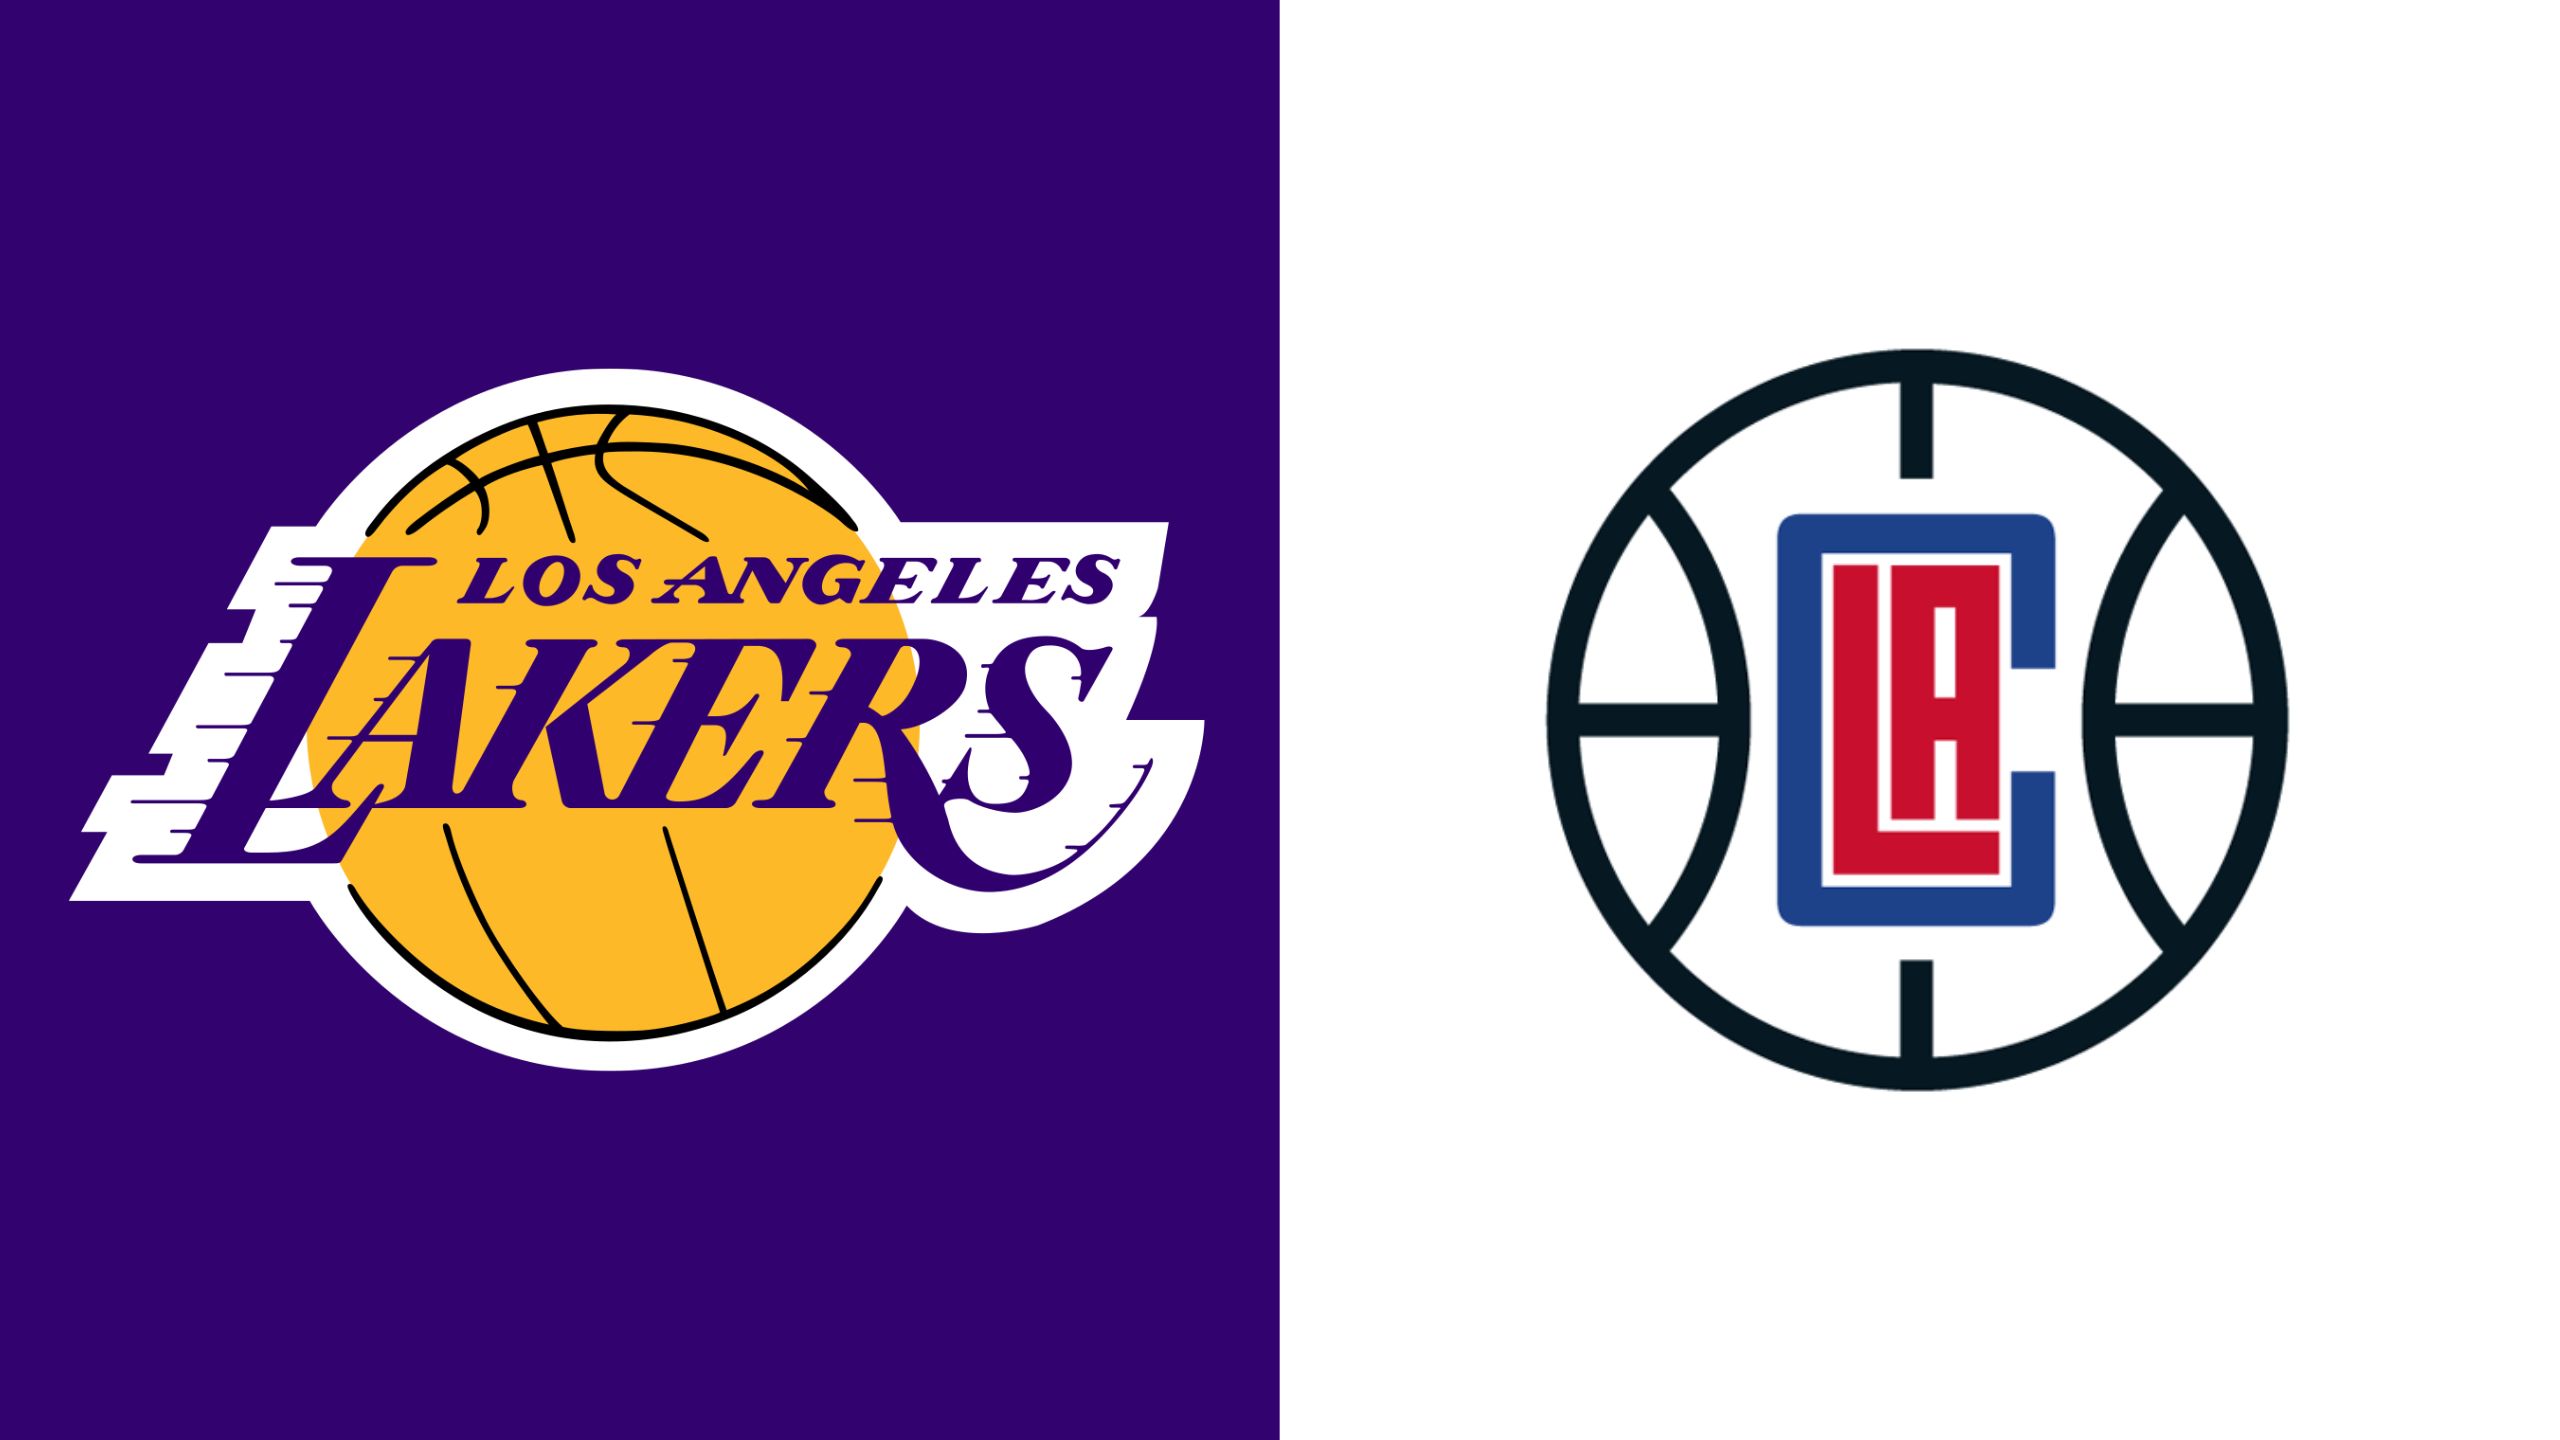 LA Lakers and LA Clippers Logos